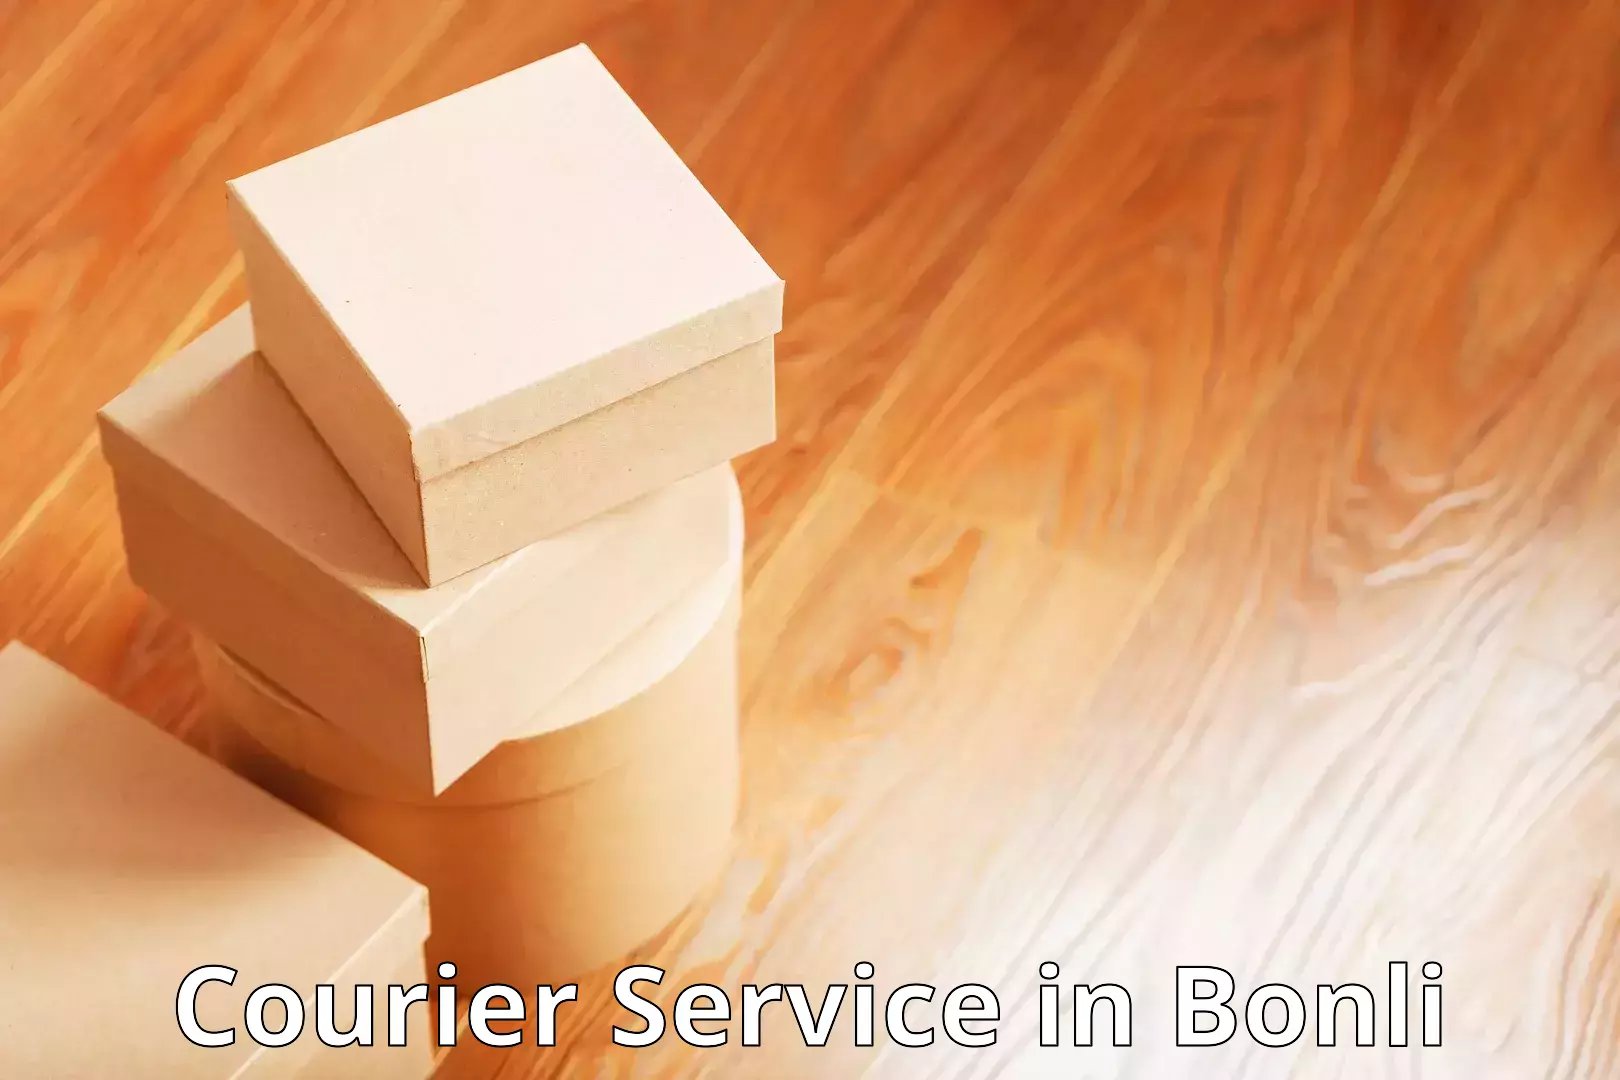 Customer-focused courier in Bonli